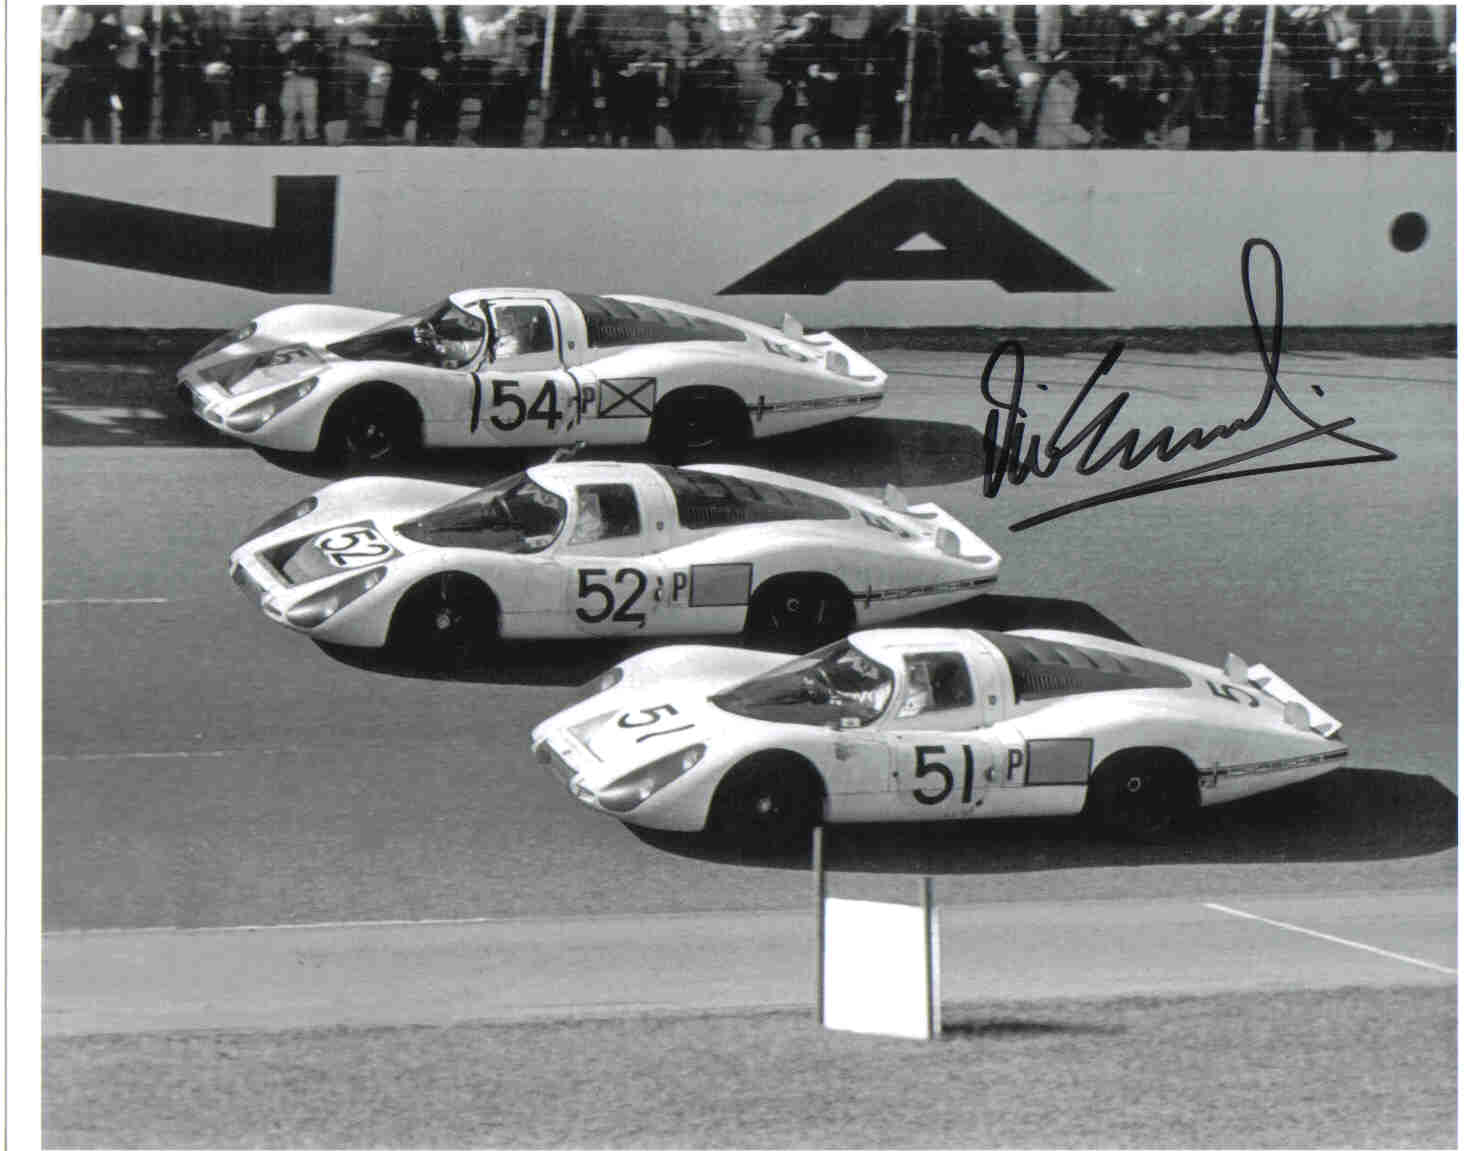 Porsche dominerte 24-timers løpet på Daytona i 1968. Øverst ser vi Elfords bil. Foto Porsche